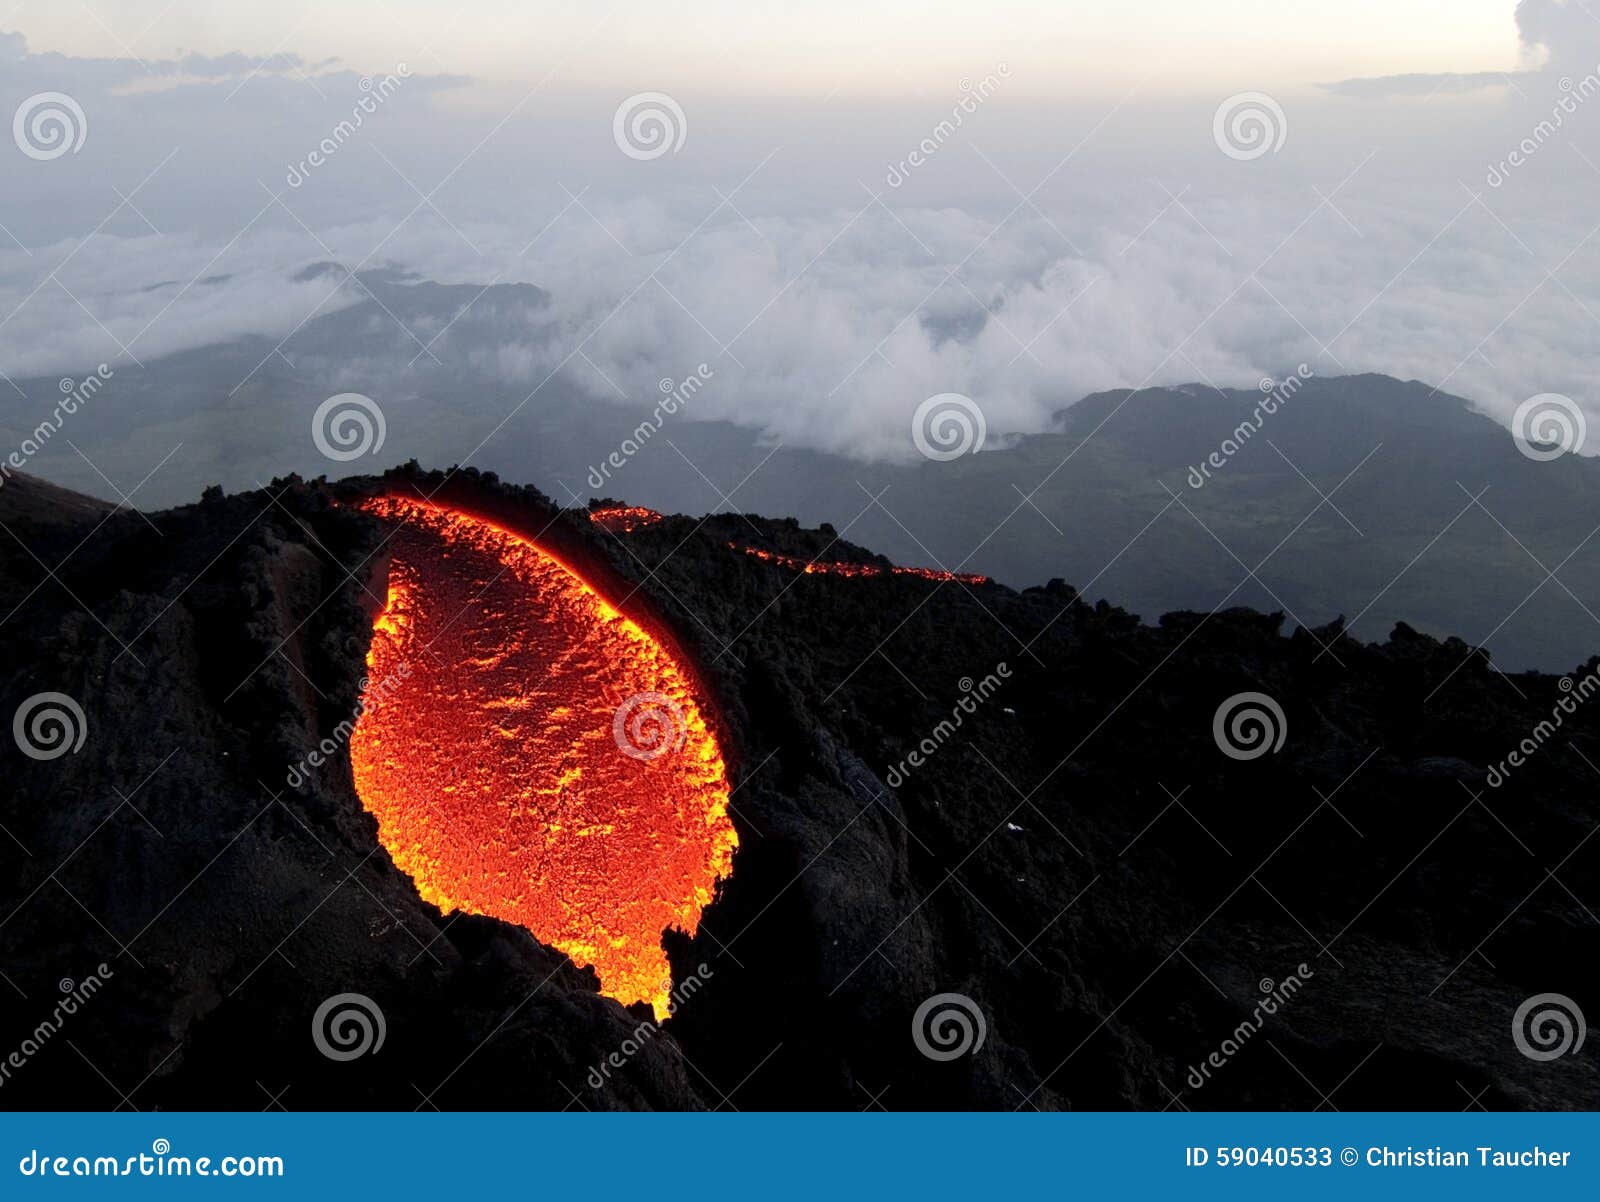 the pacaya vulkan is bleeding